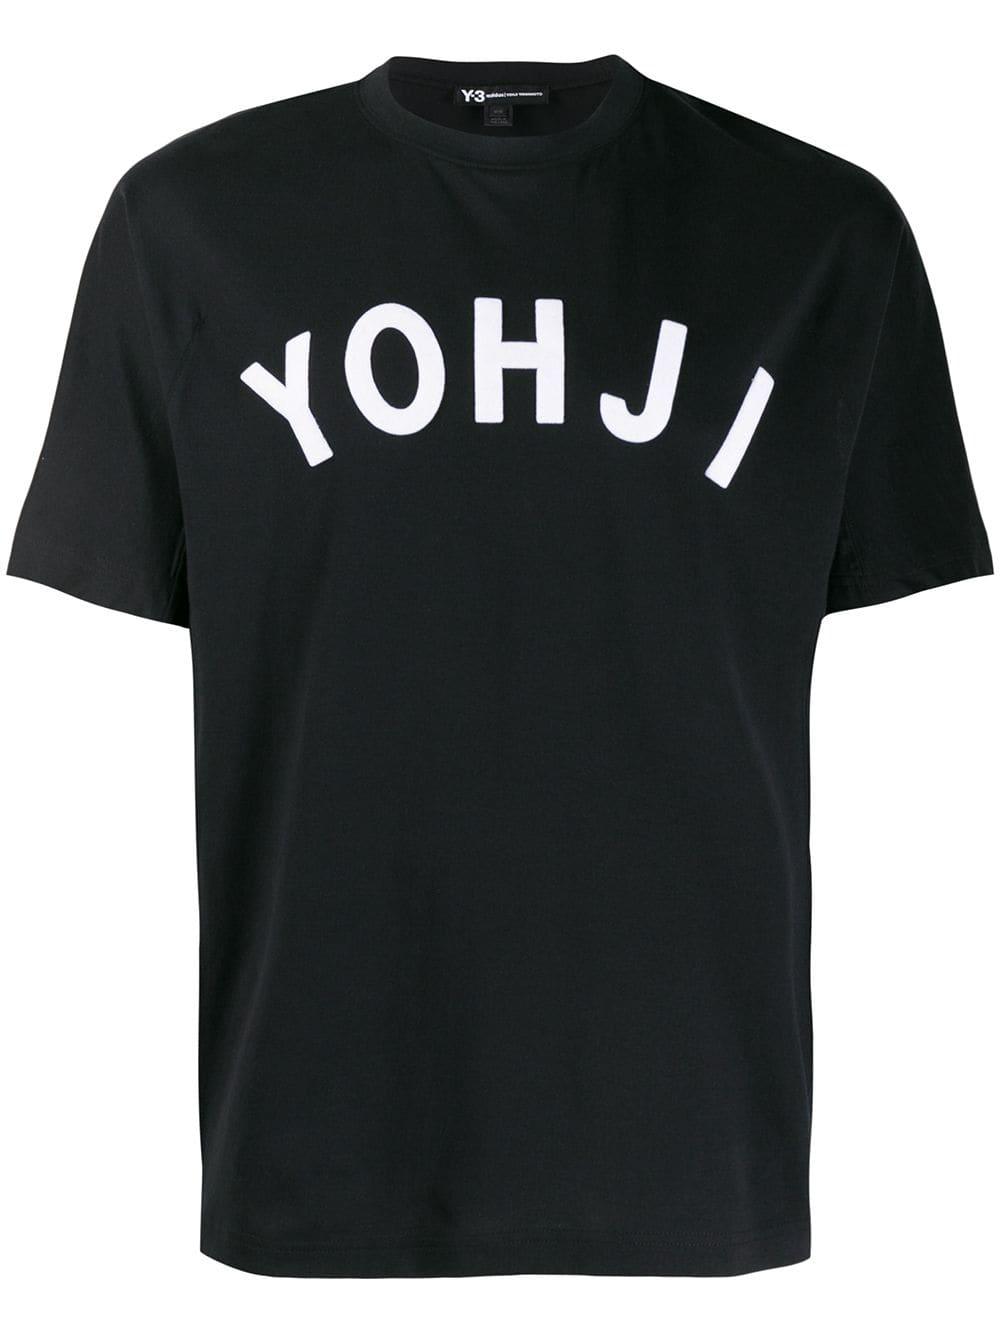 Y-3 Cotton Yohji T-shirt in Black for Men - Lyst